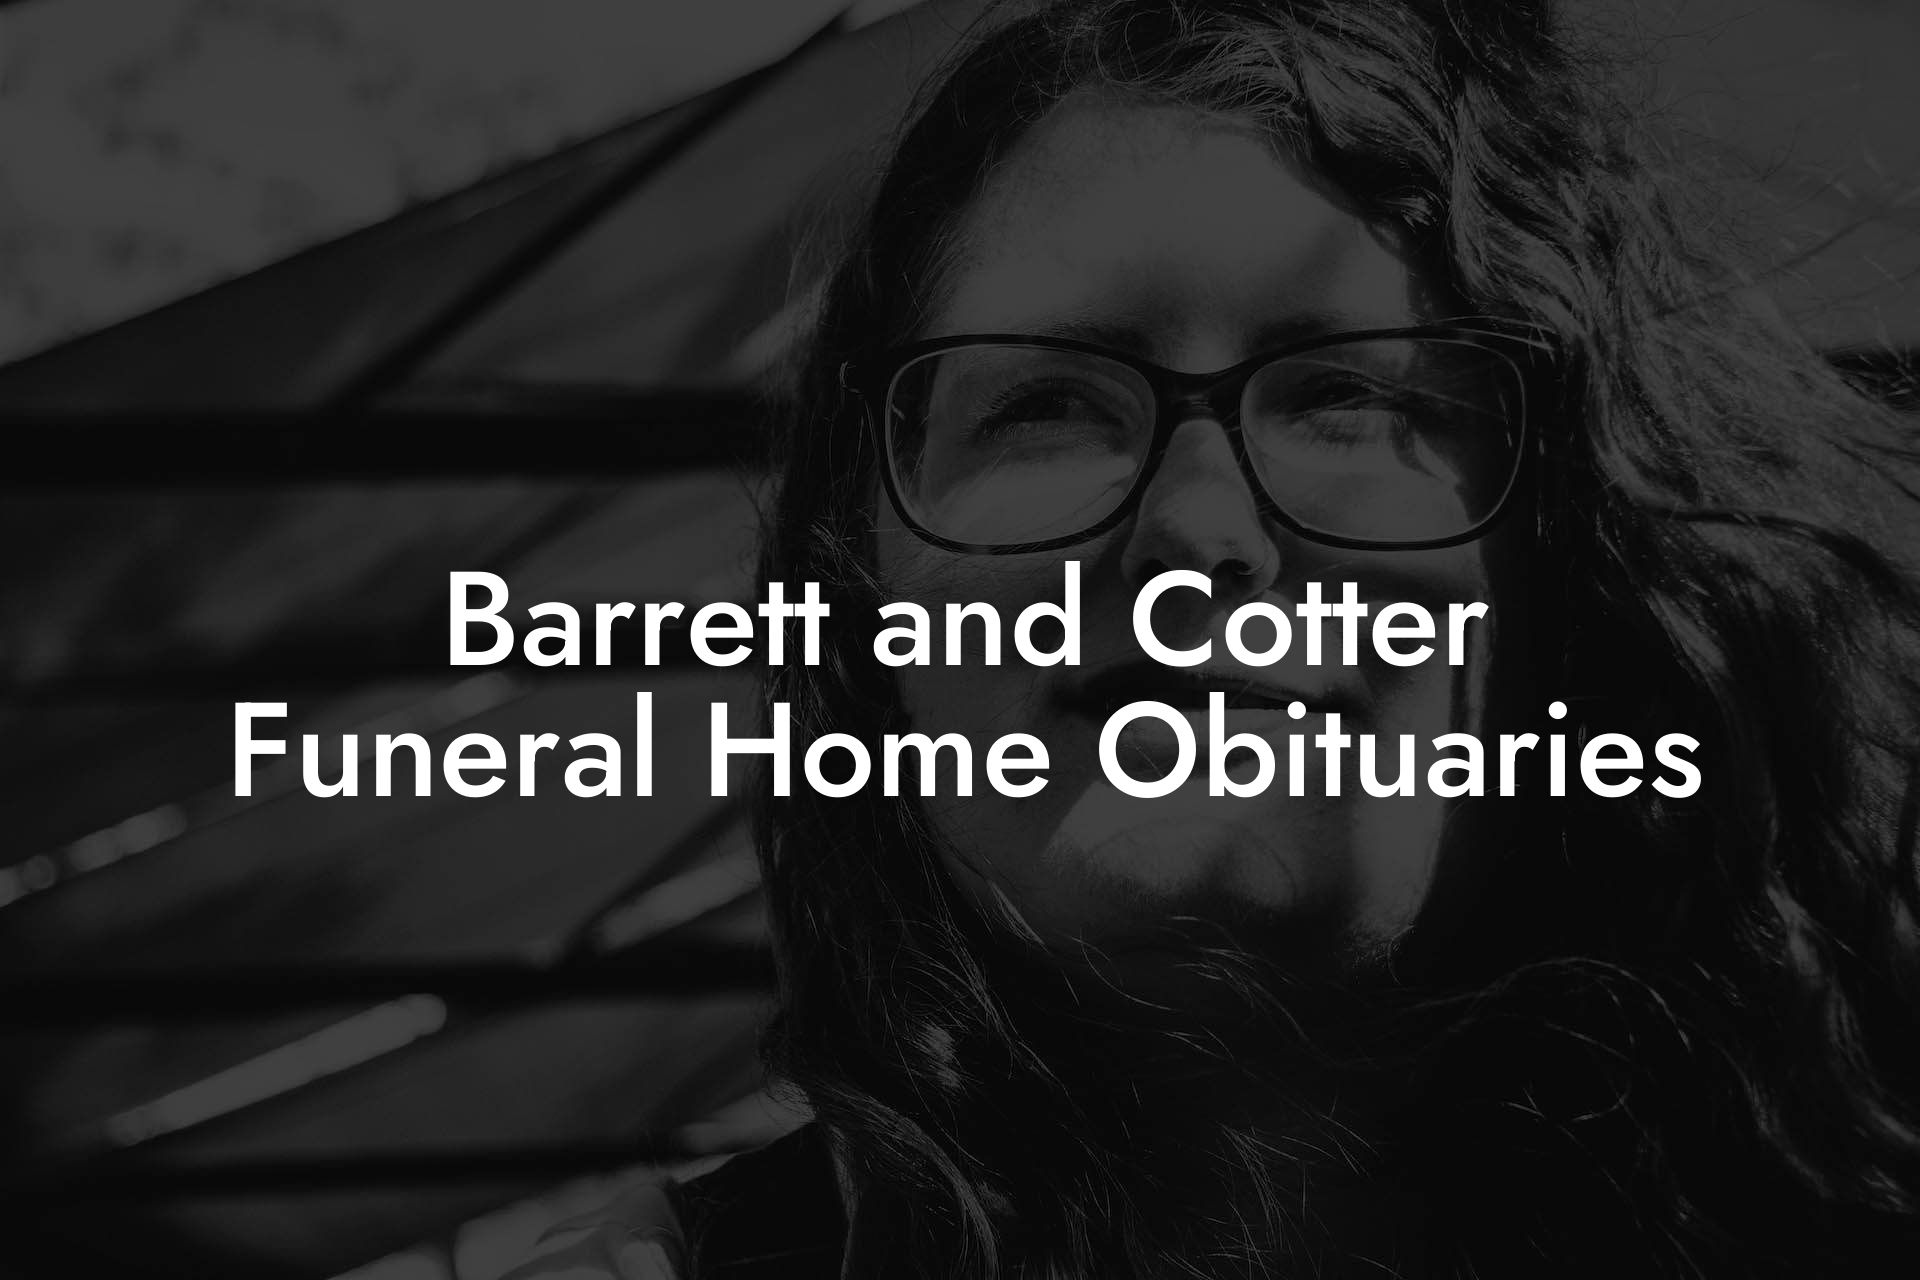 Barrett and Cotter Funeral Home Obituaries